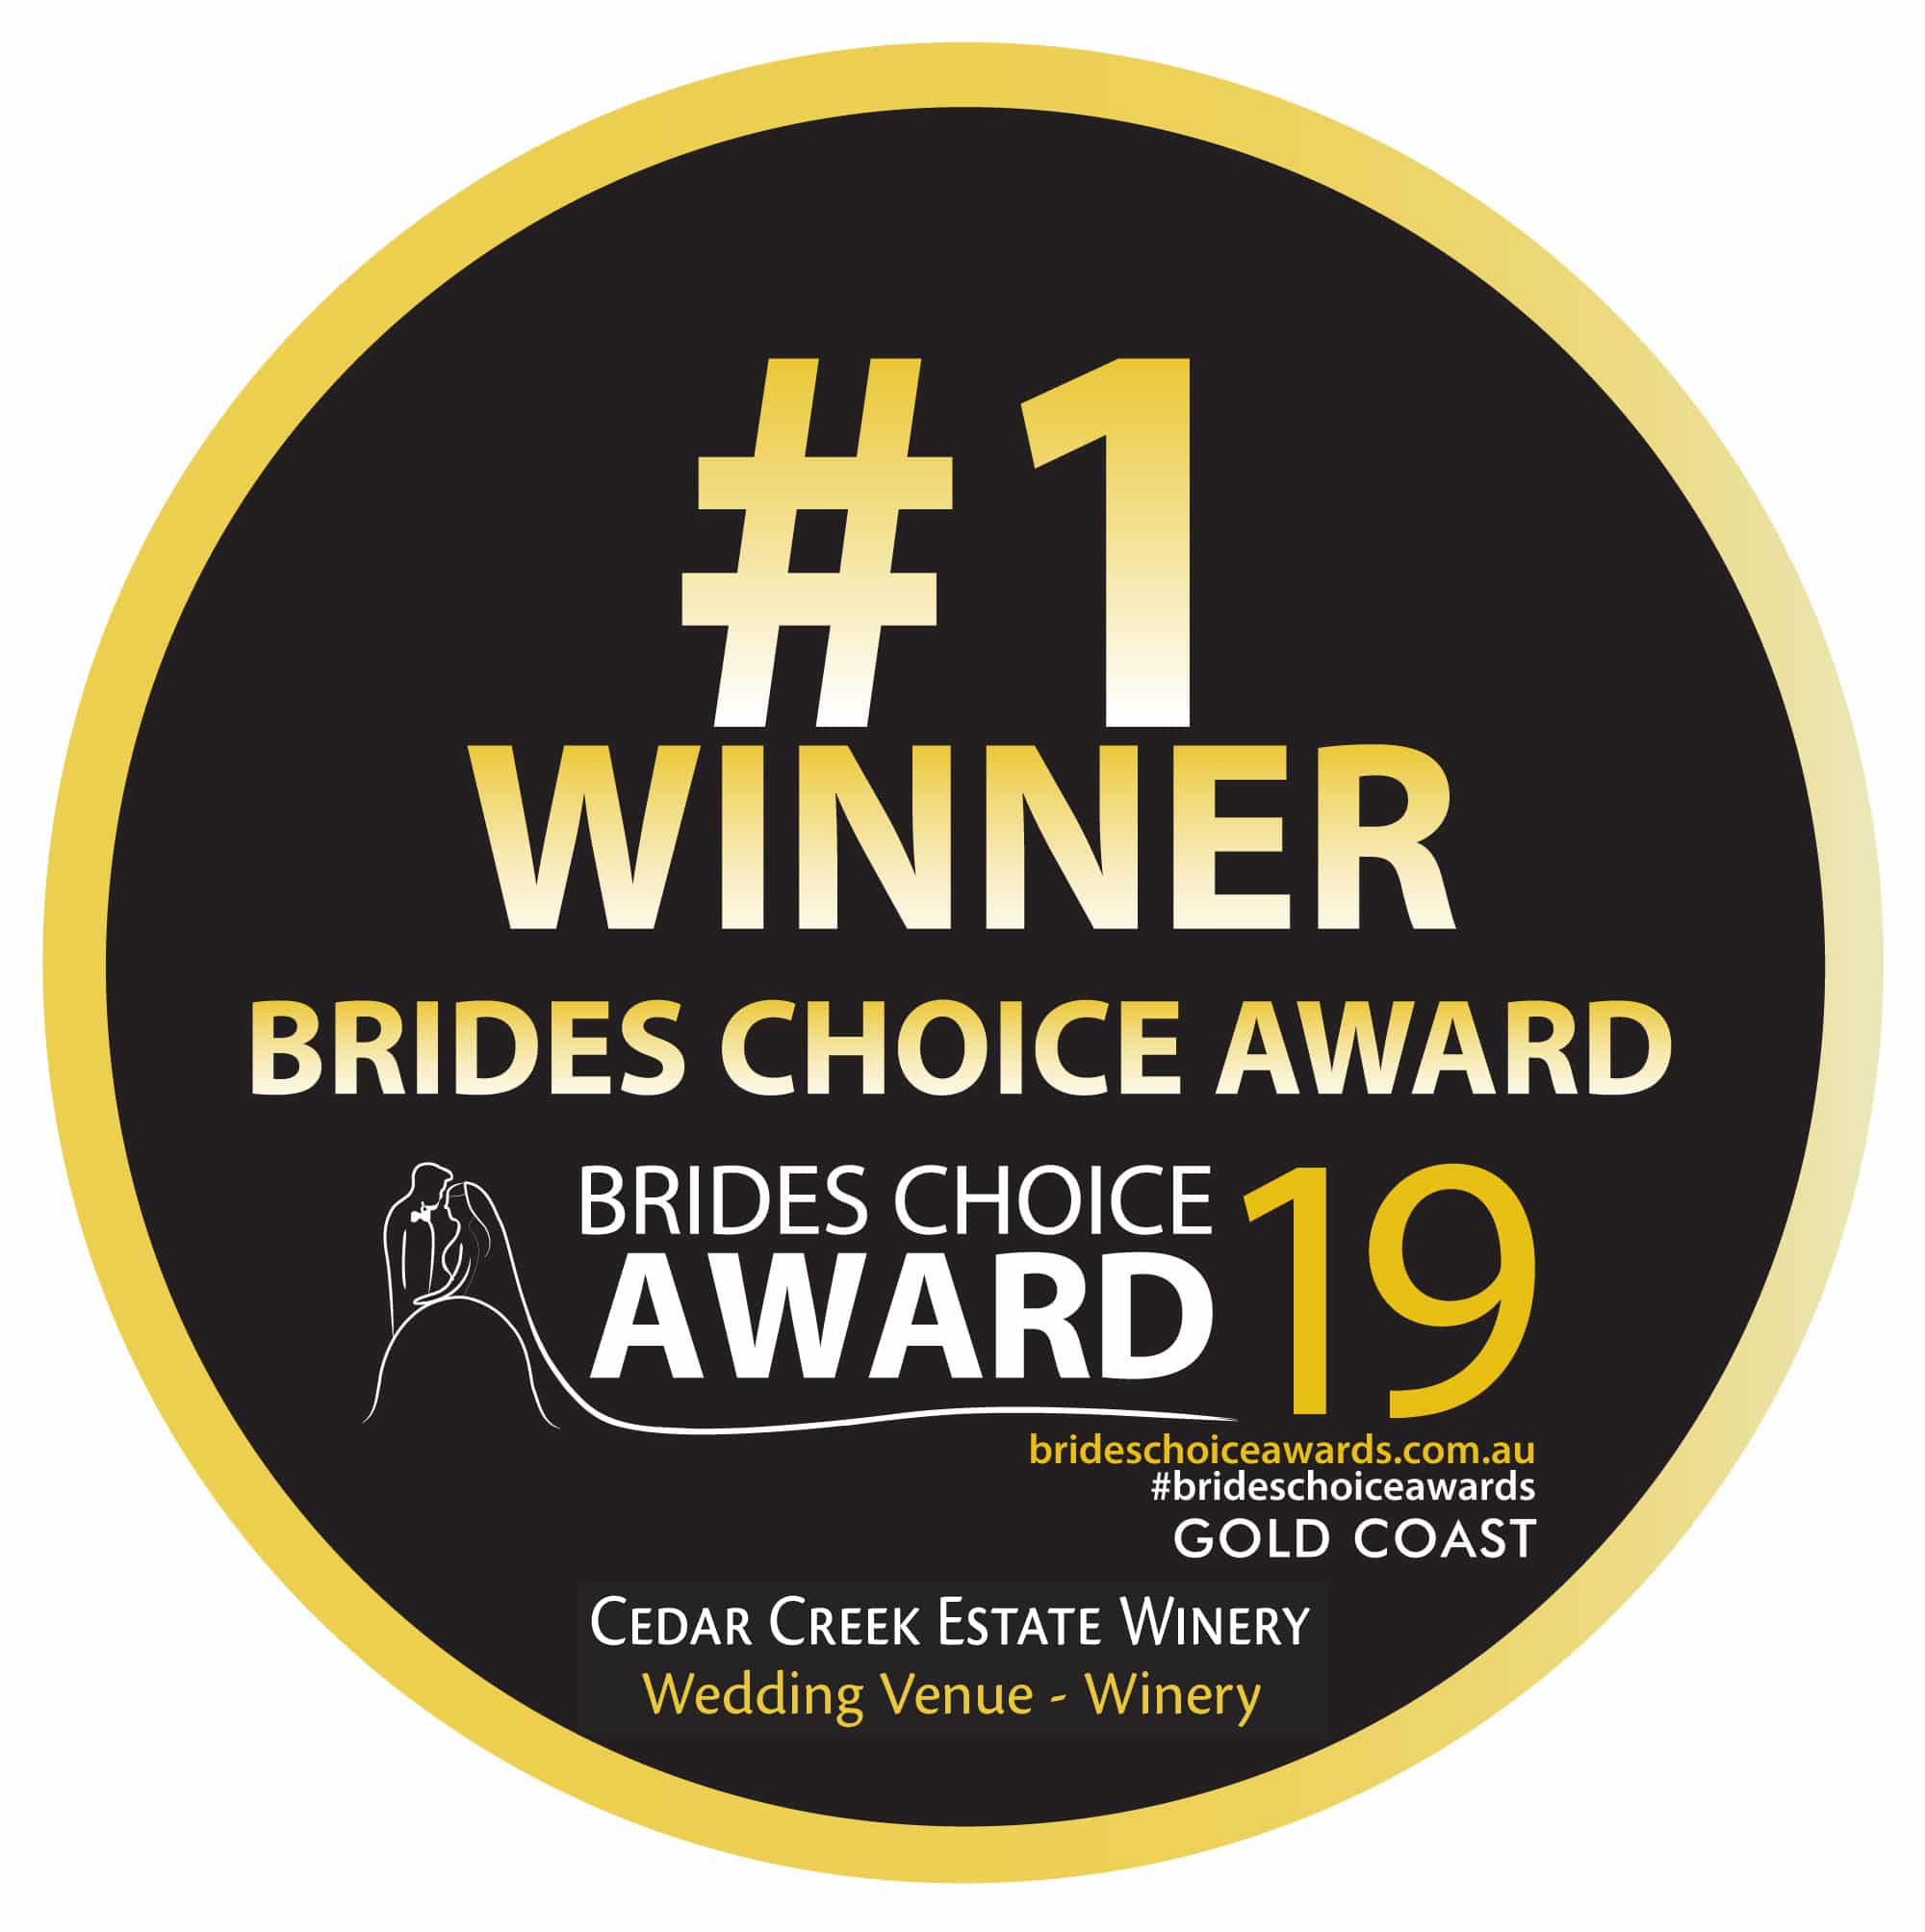 Brides Choice Award 2019